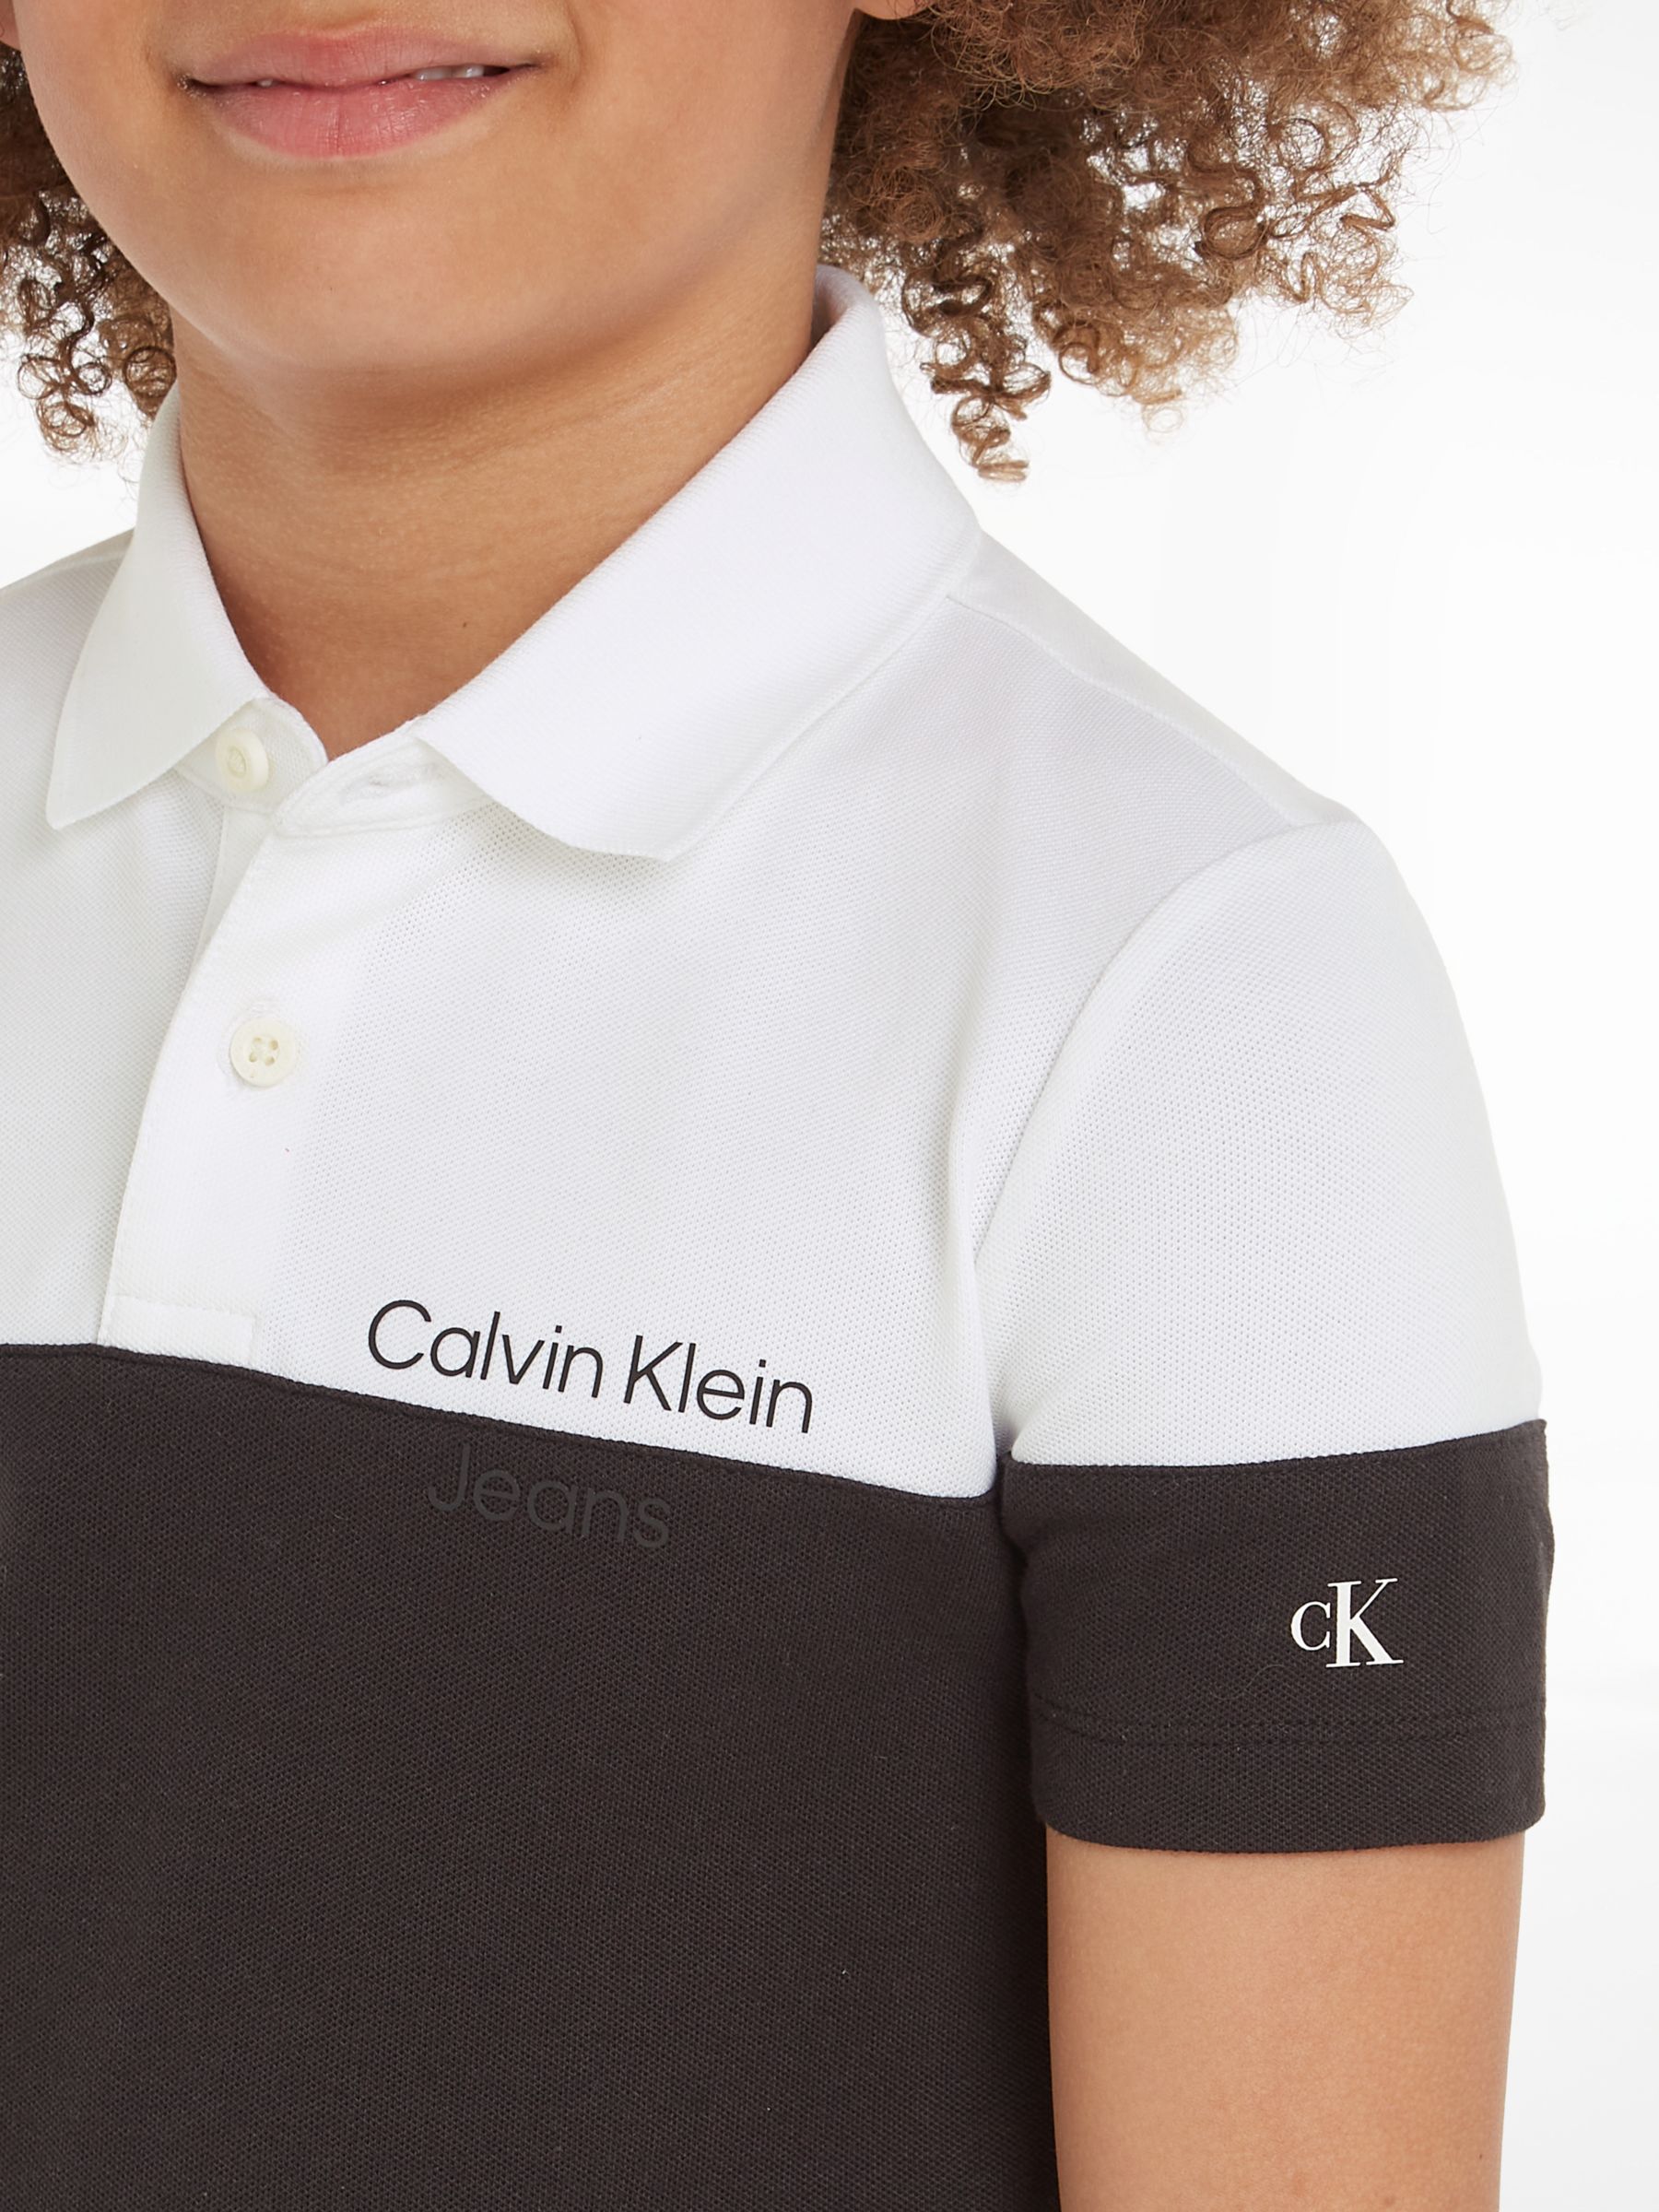 Calvin Klein Kids' Pique Block Polo Shirt, Ck Black, 10 years